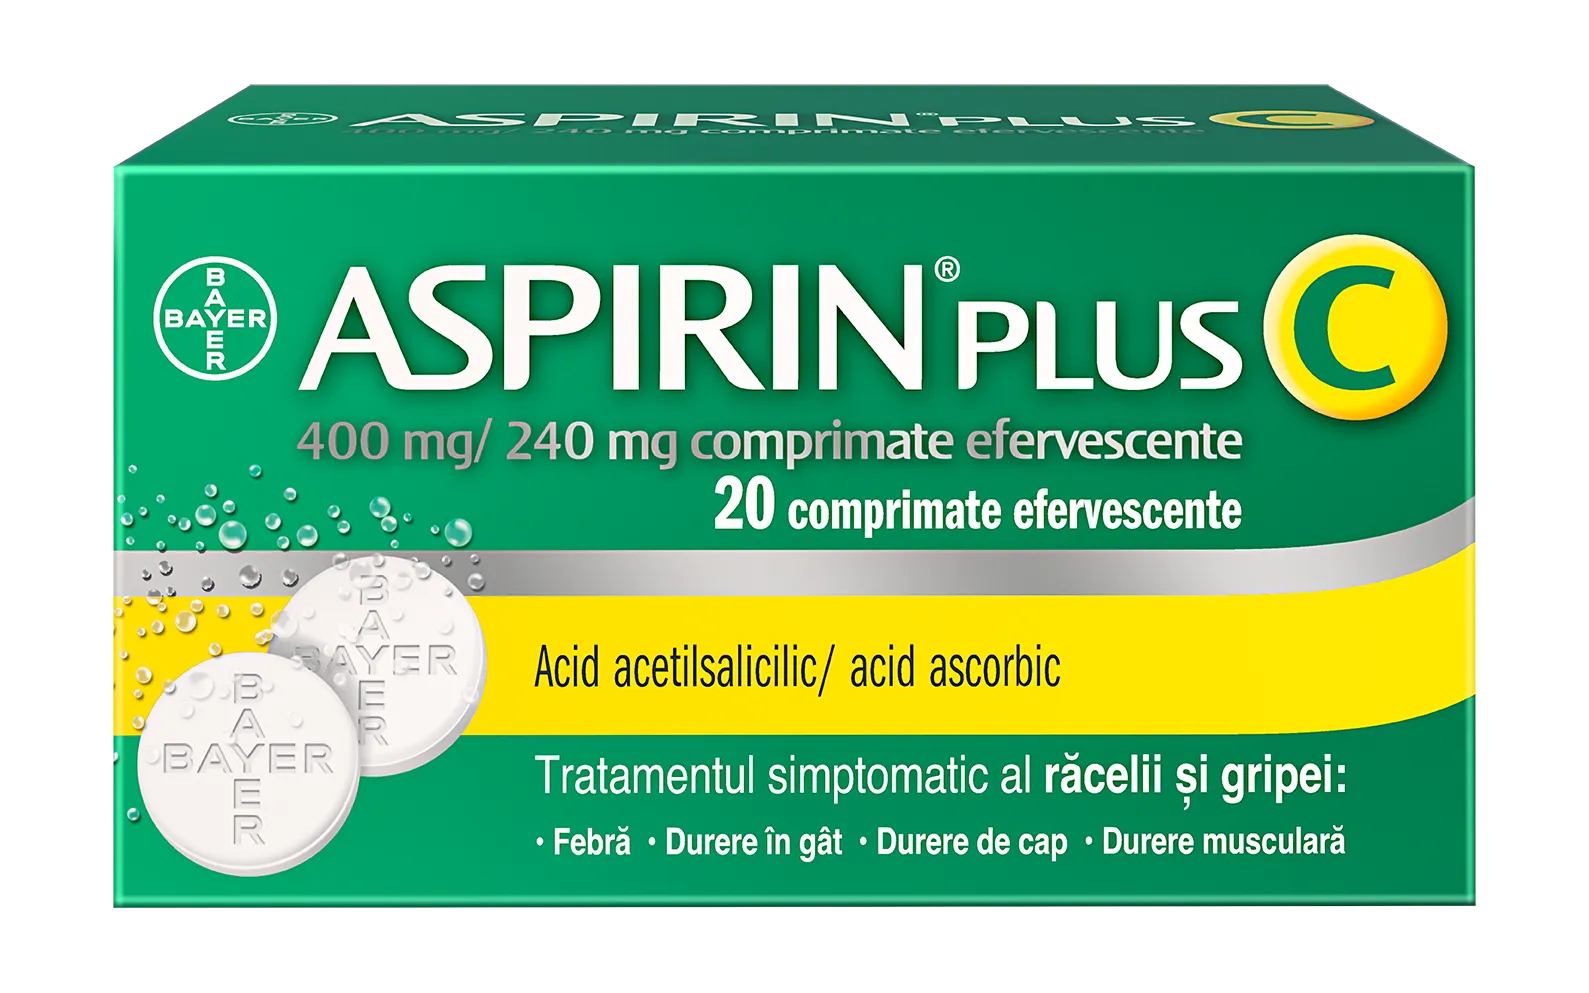 Aspirin Plus C, 20 comprimate efervescente, Bayer 